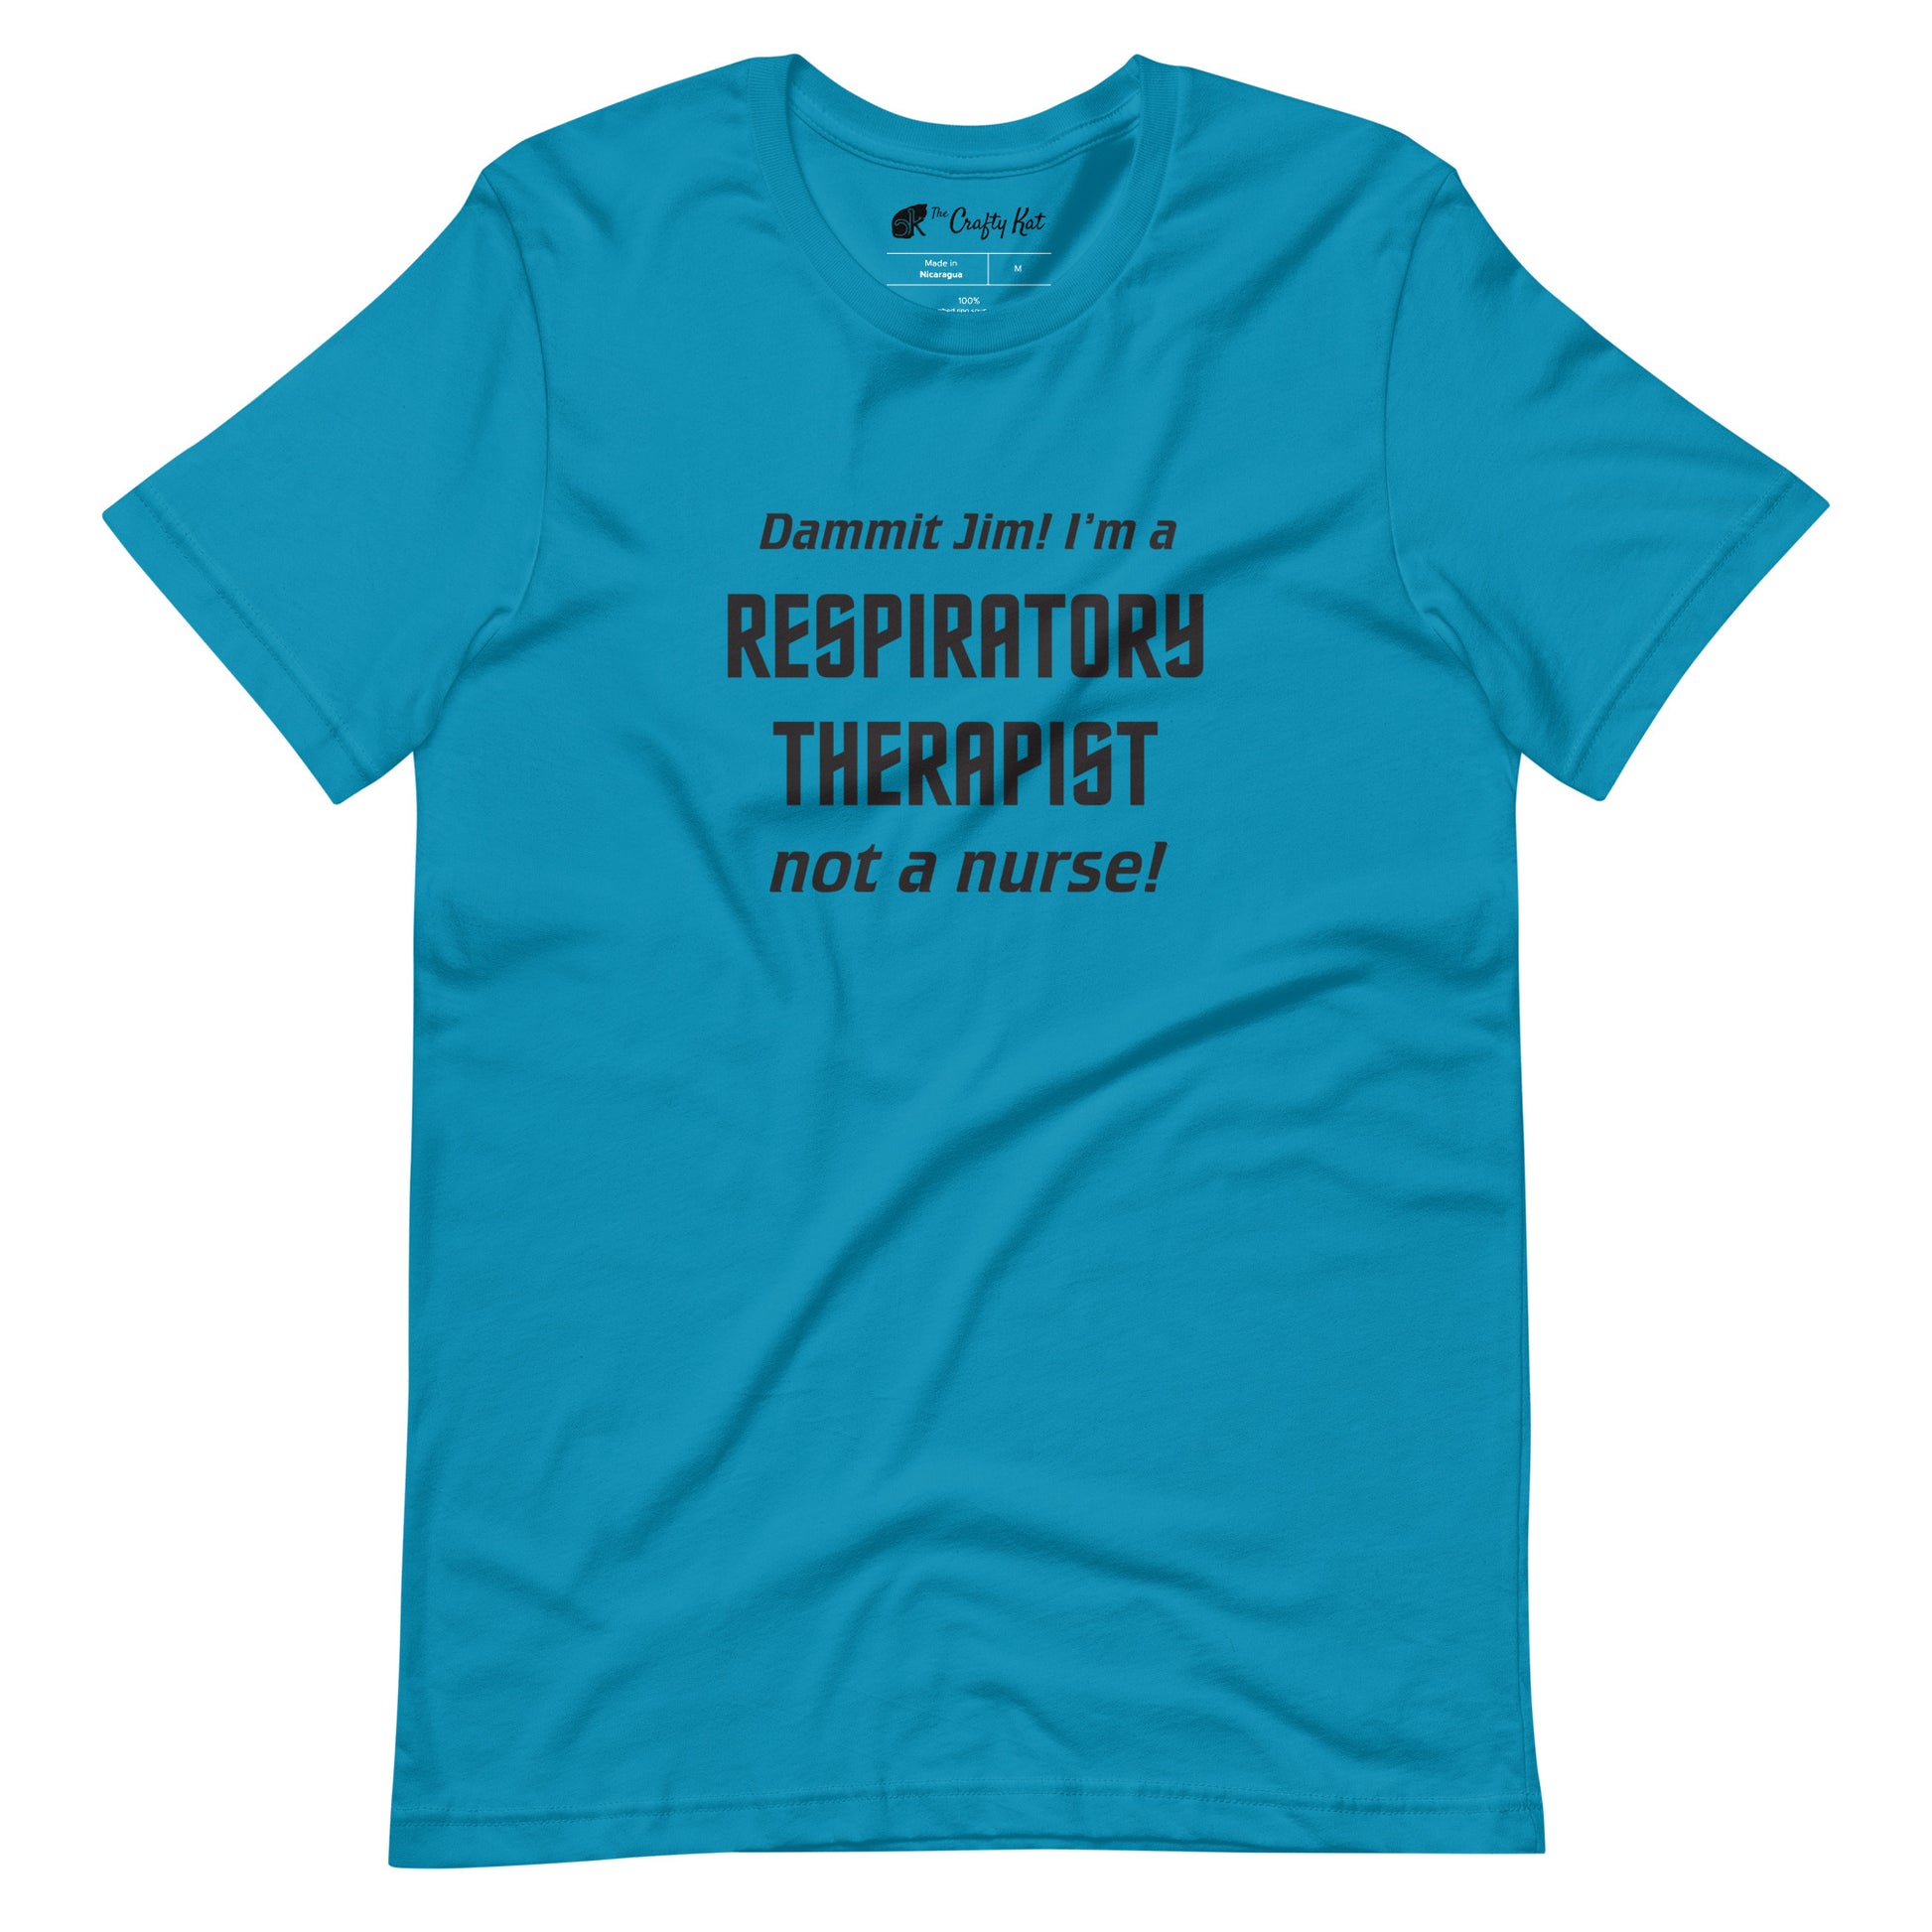 Aqua (cyan) t-shirt with text graphic in Star Trek font: "Dammit Jim! I'm a RESPIRATORY THERAPIST not a nurse!"